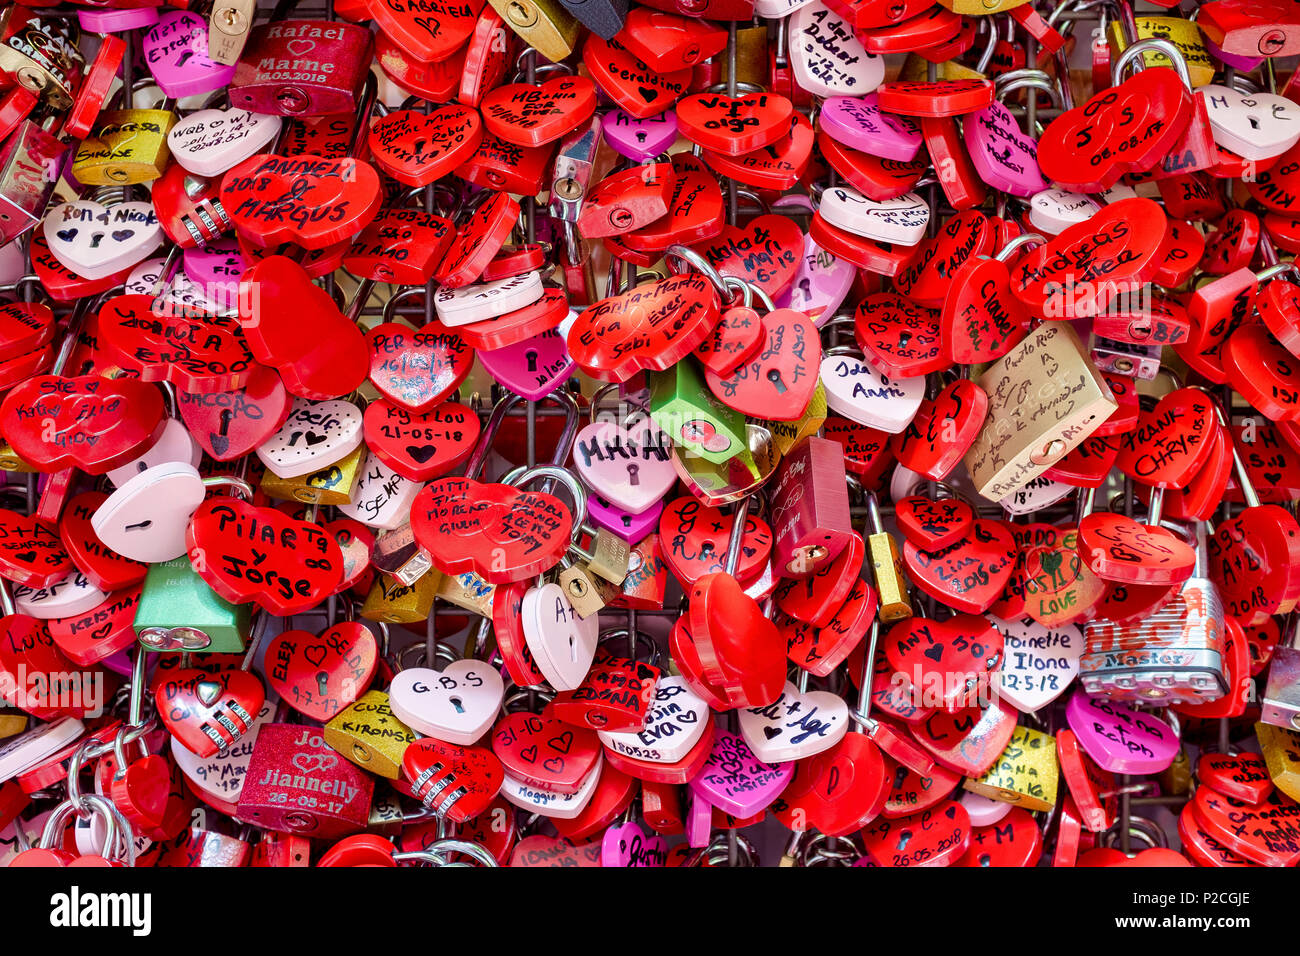 Love locks in Juliet’s House, Verona, Italy Stock Photo